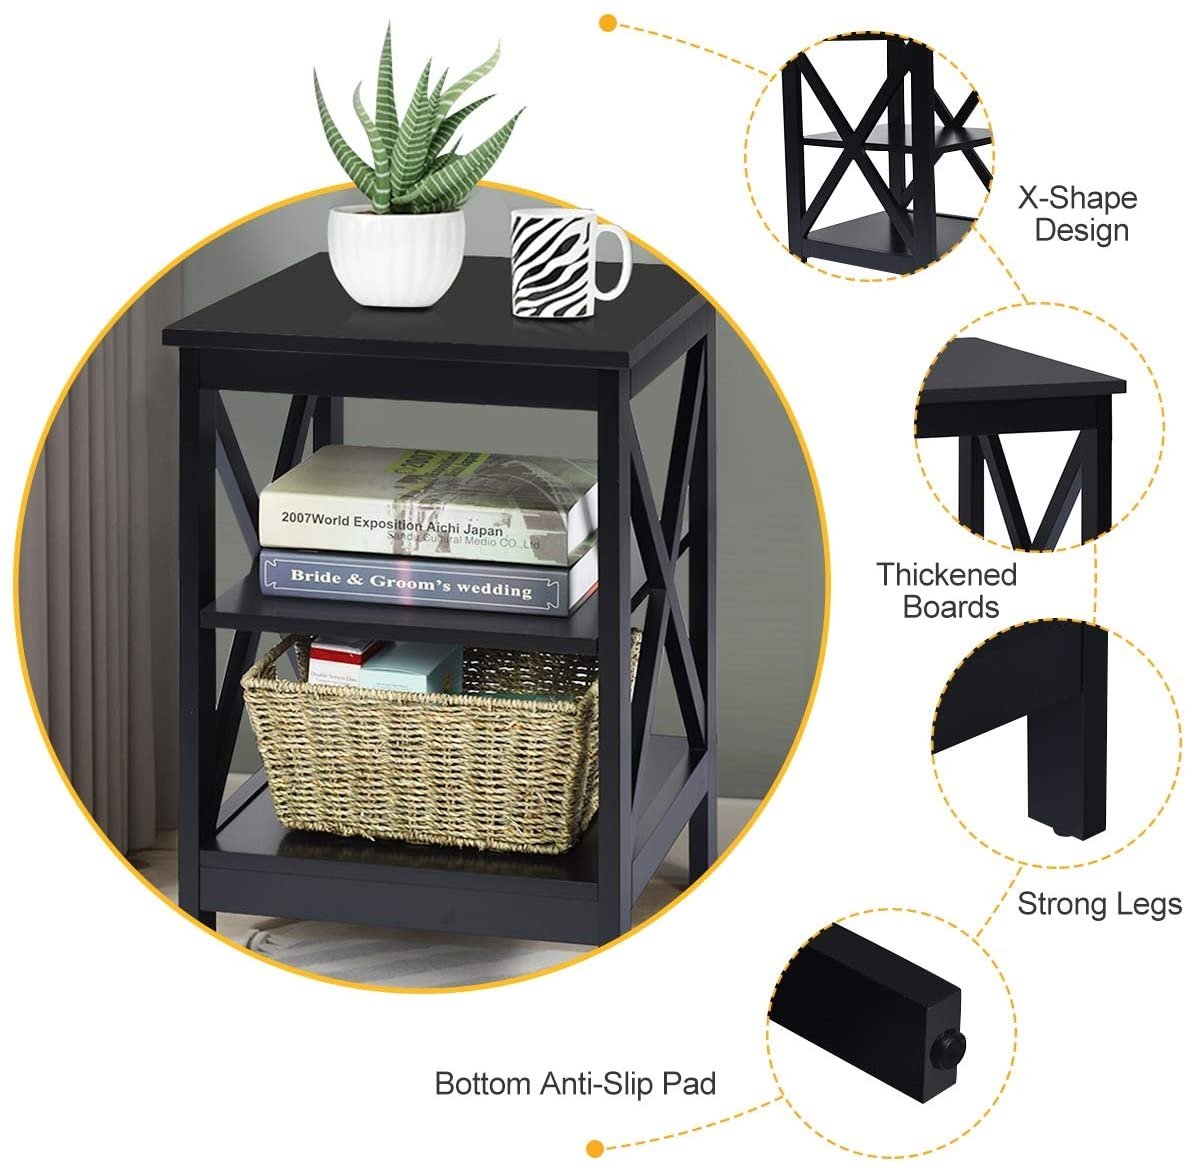 3-Tier X-Design Nightstands with Storage Shelves for Living Room Bedroom, Black - Gallery Canada